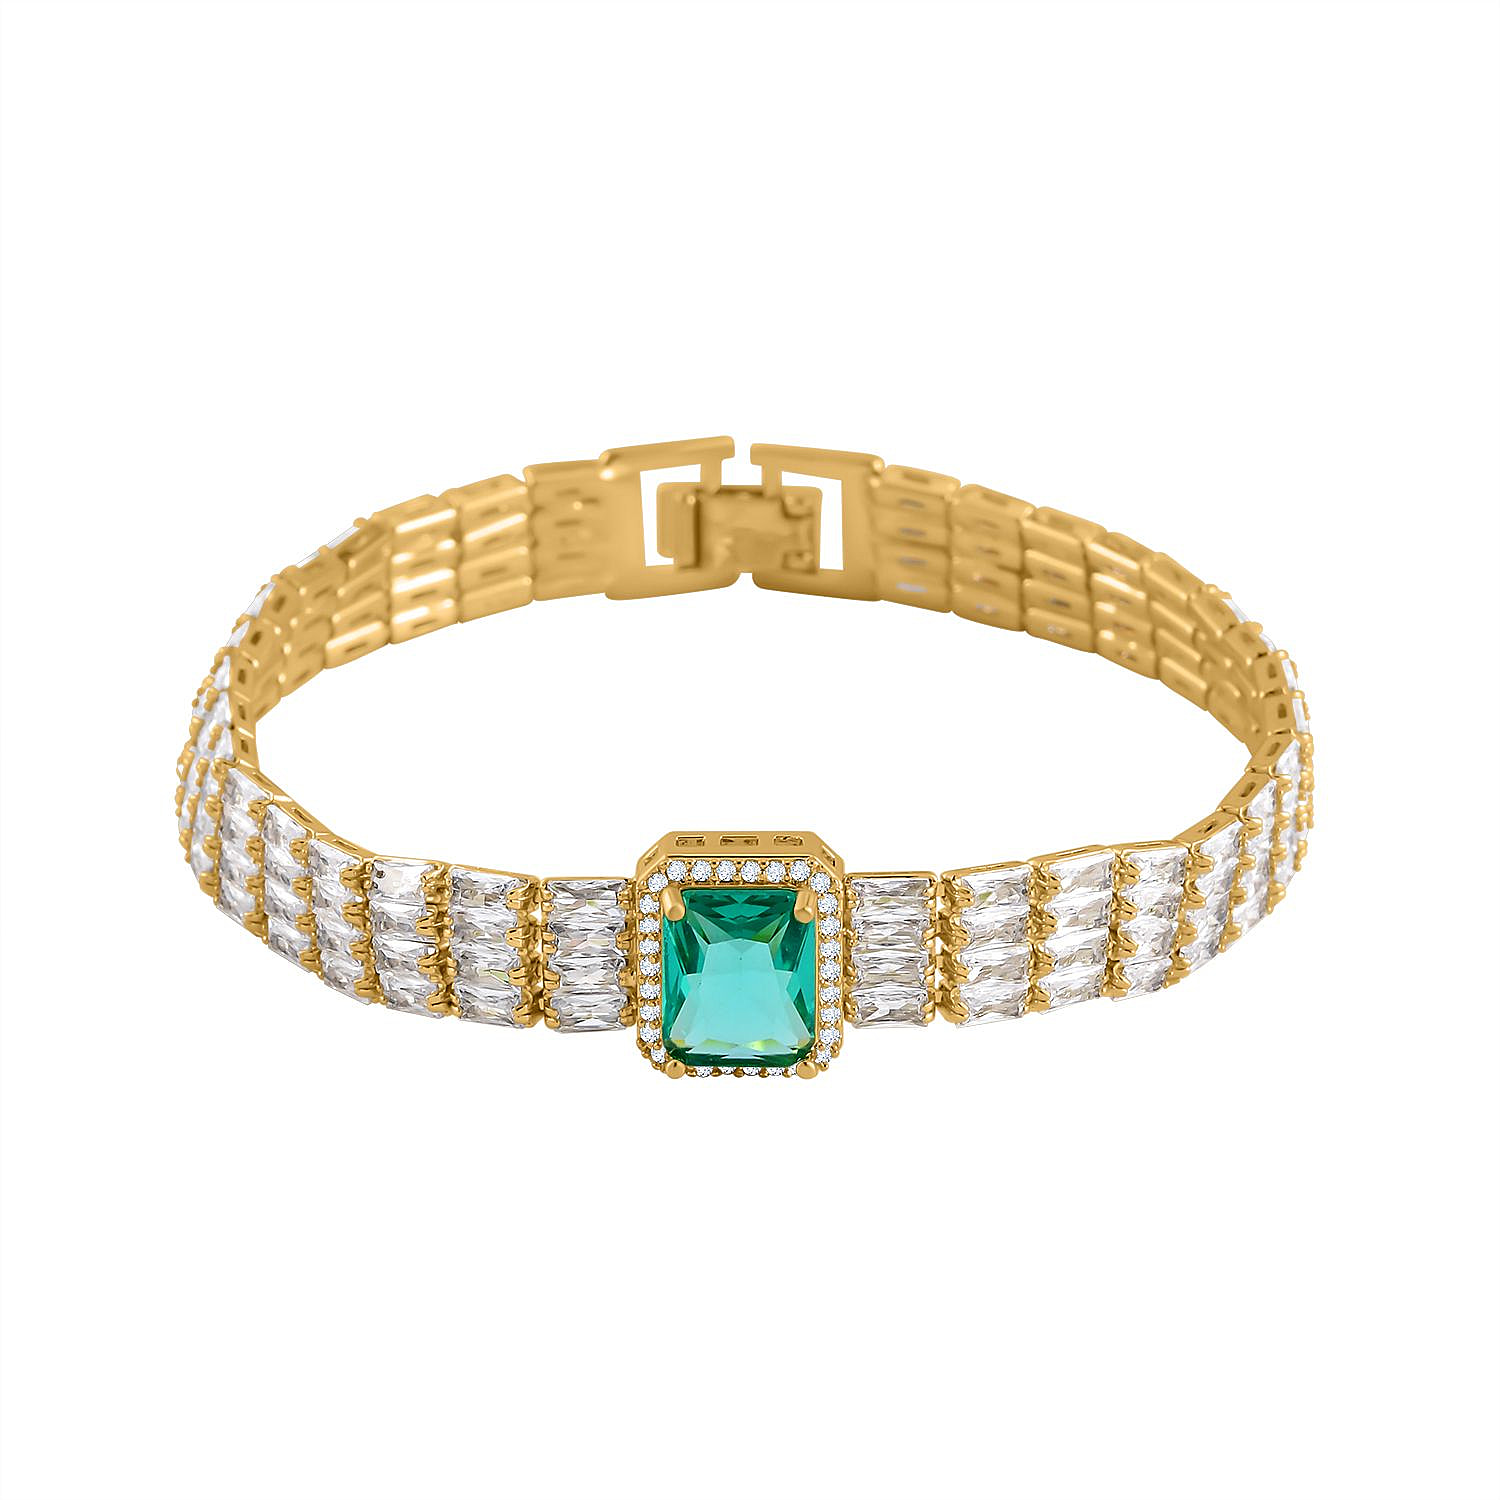 Designer Inspired - Simulated Emerald Colour Austrian Crystal & Cubic Zirconia Bracelet (Size - 7.5)